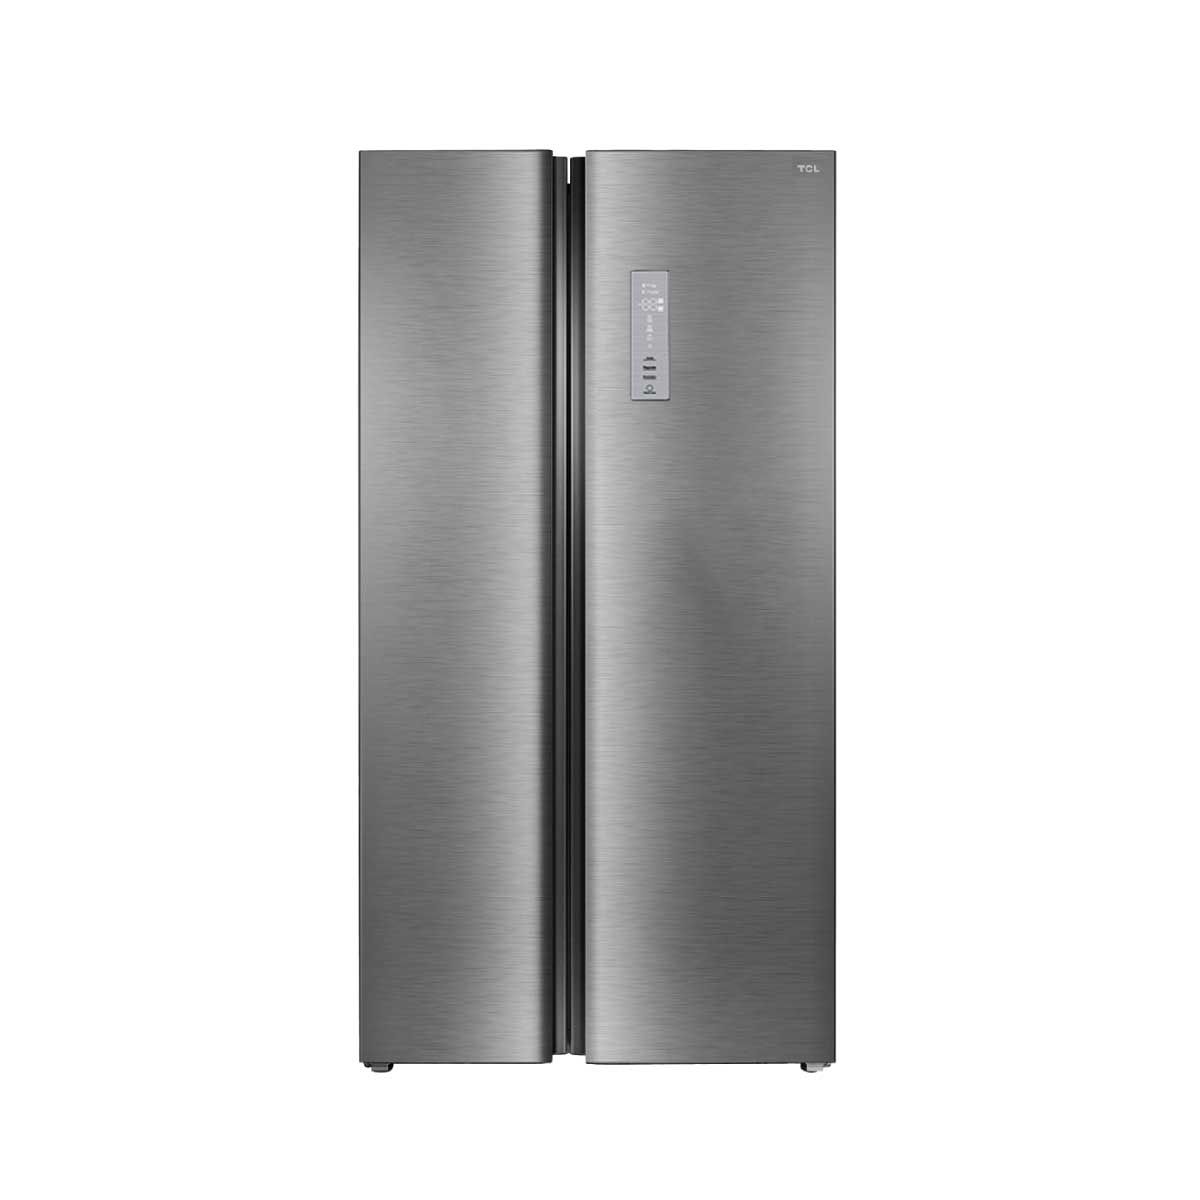 TCL ตู้เย็น Sidebyside 17.5Q สีเทาเข้ม รุ่น P505SBG